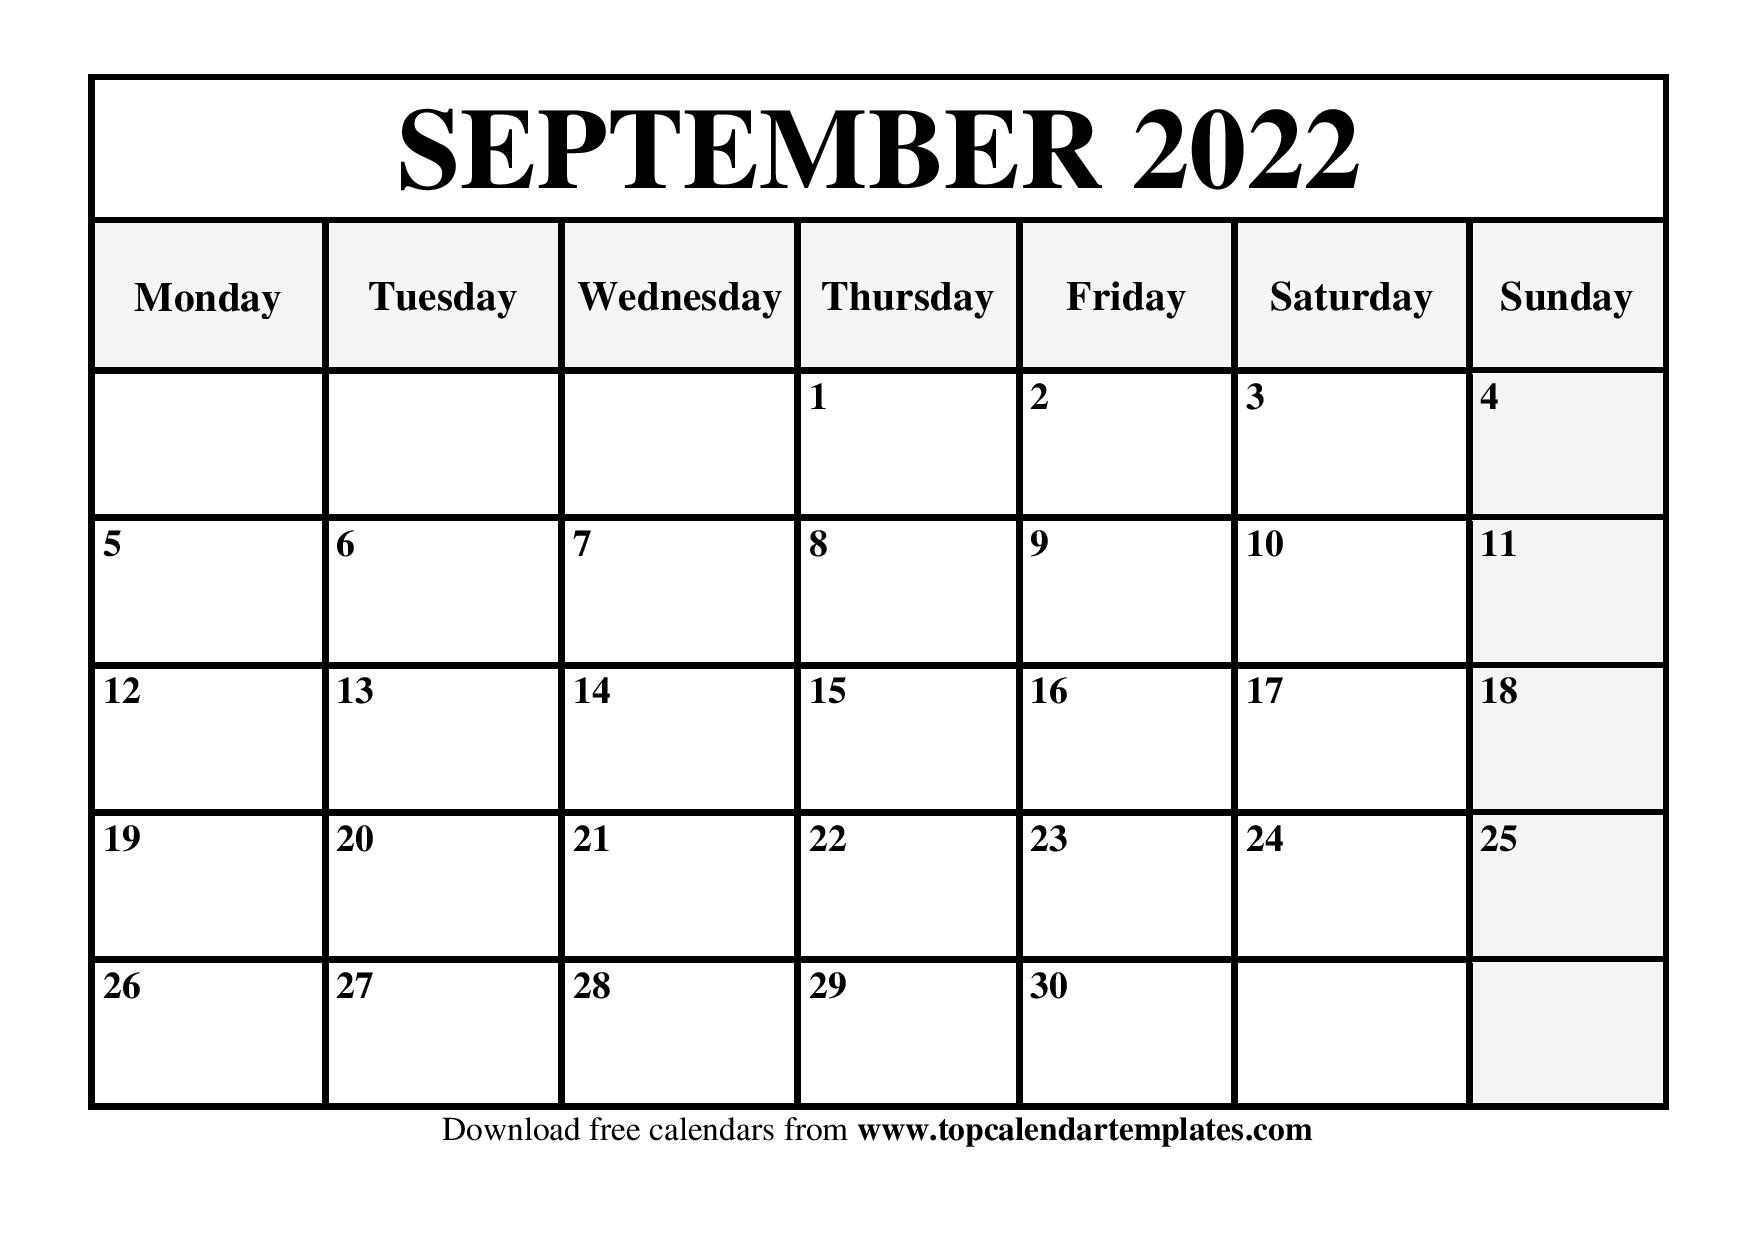 Download September 2022 Calendar Printable Calendar September 2022 Templates - Pdf, Word, Excel